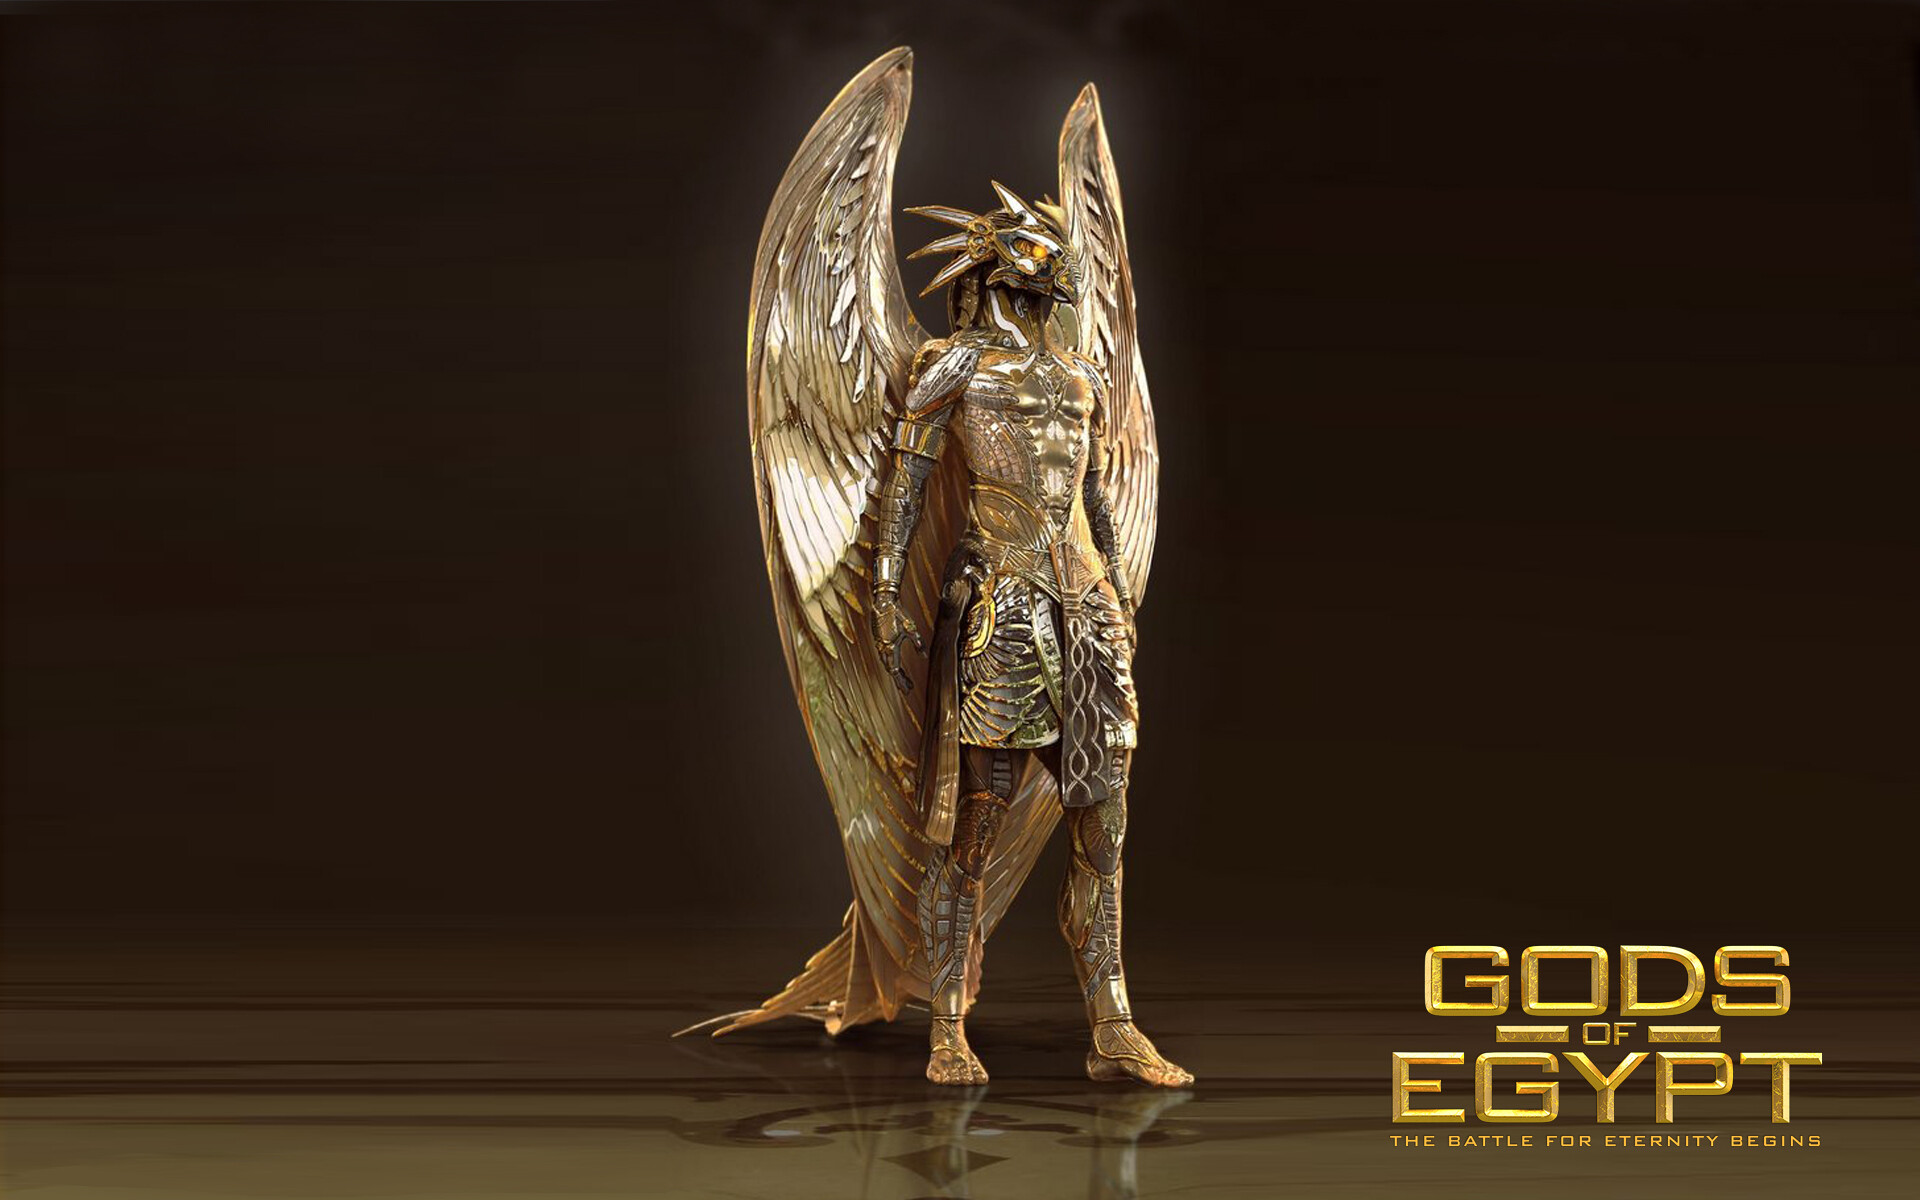 Gods of Egypt (Movie): Nikolaj Coster-Waldau as Horus, The deity of Air and Hathor's lover. 1920x1200 HD Wallpaper.